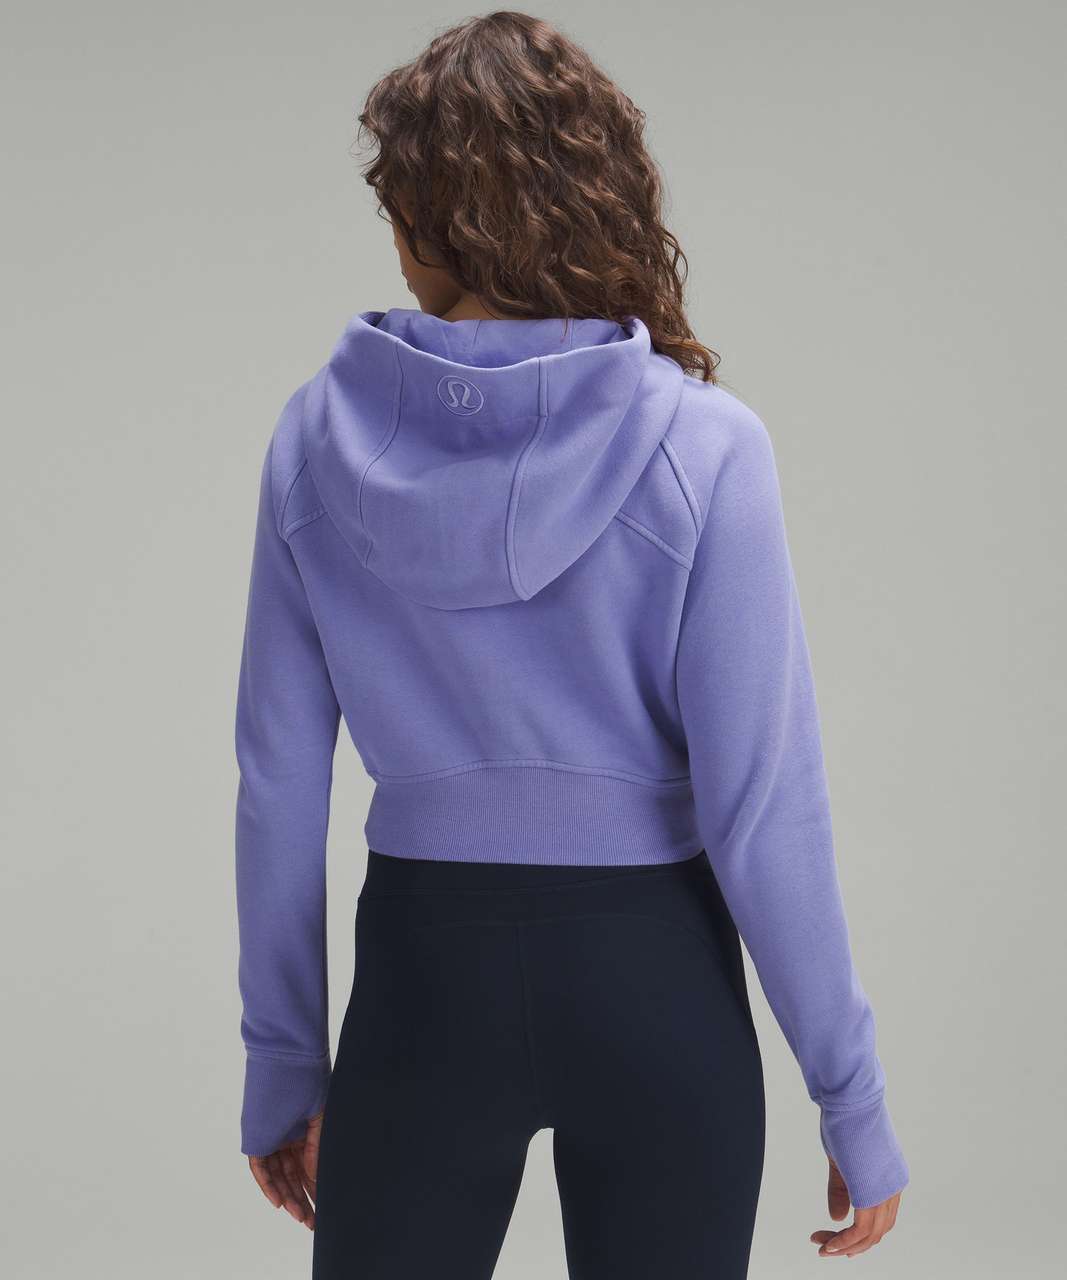 Lululemon Scuba Hoodie Purple Size M - $88 (34% Off Retail) New